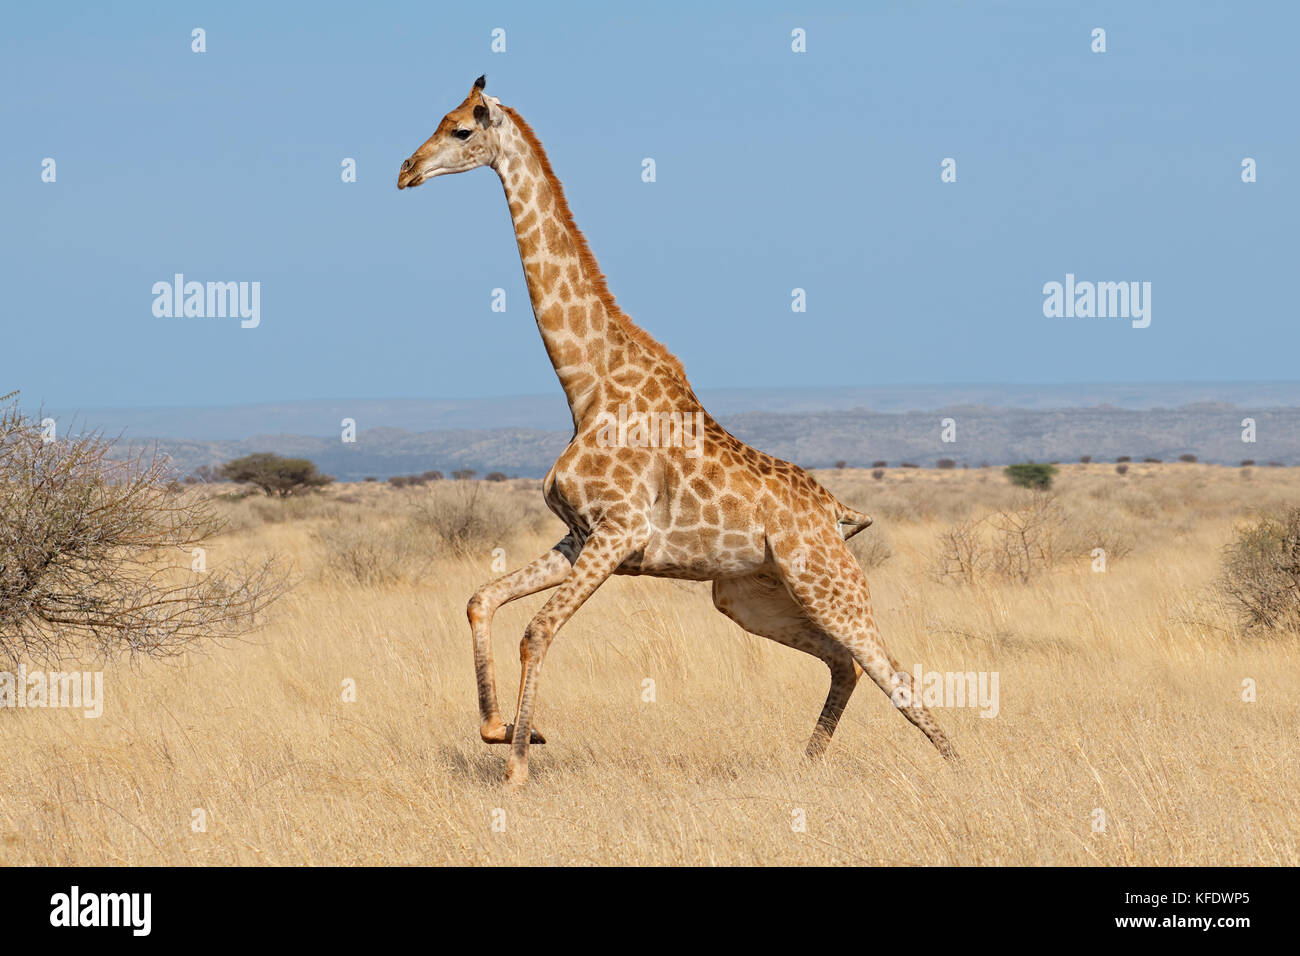 Giraffe (Giraffa camelopardalis) running on the African plains, South Africa Stock Photo